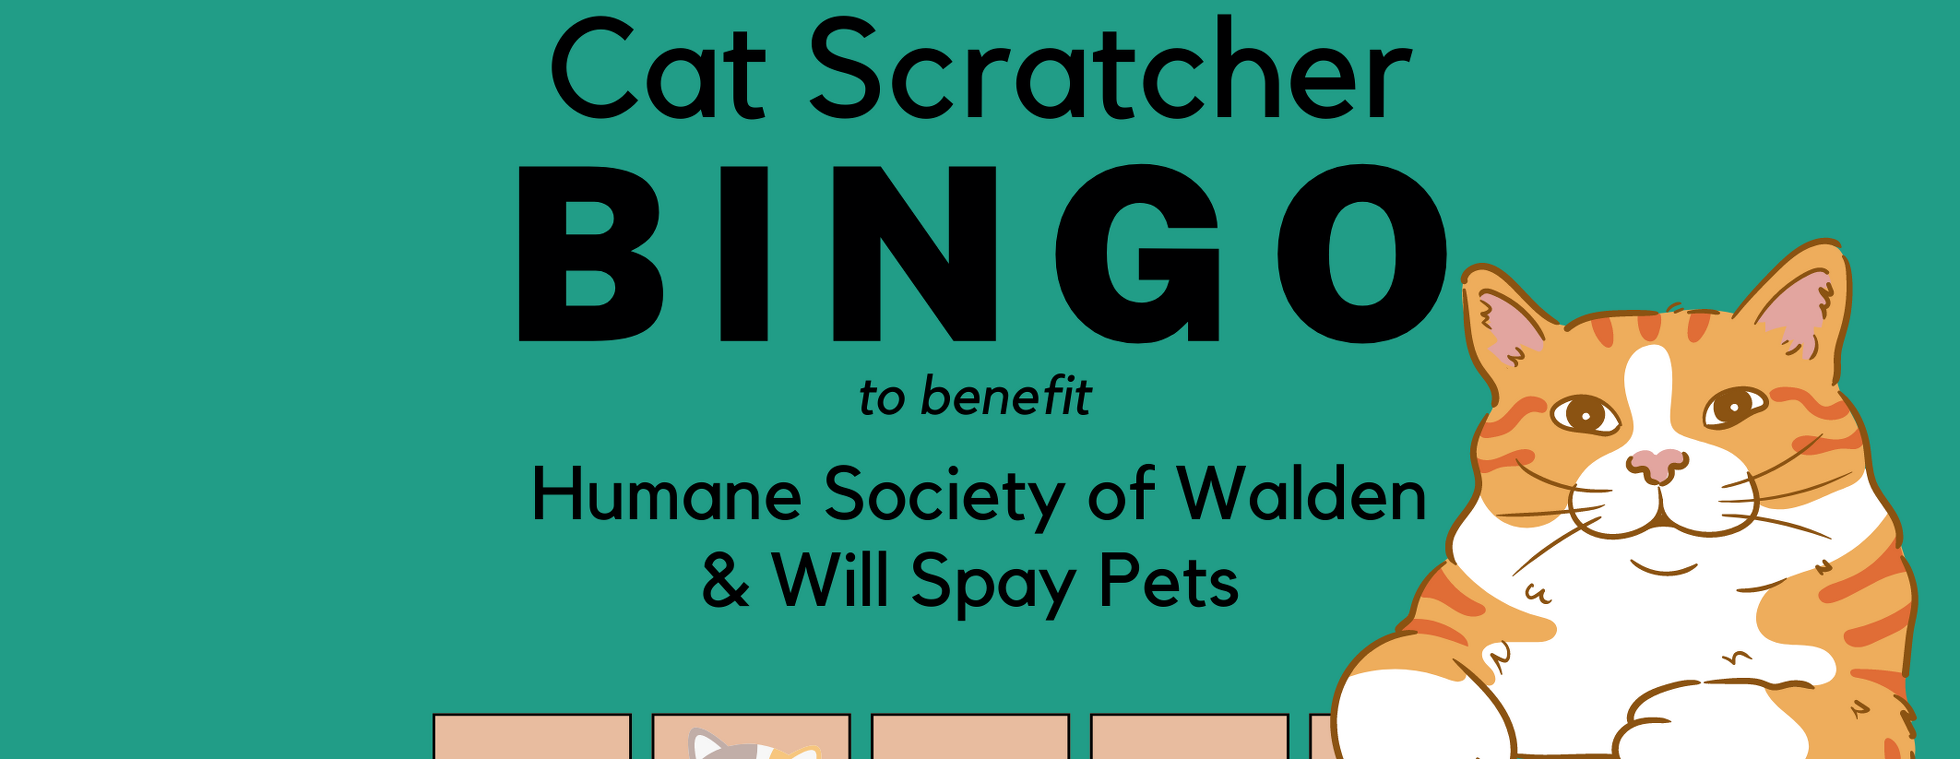 Cat Scratcher Bingo